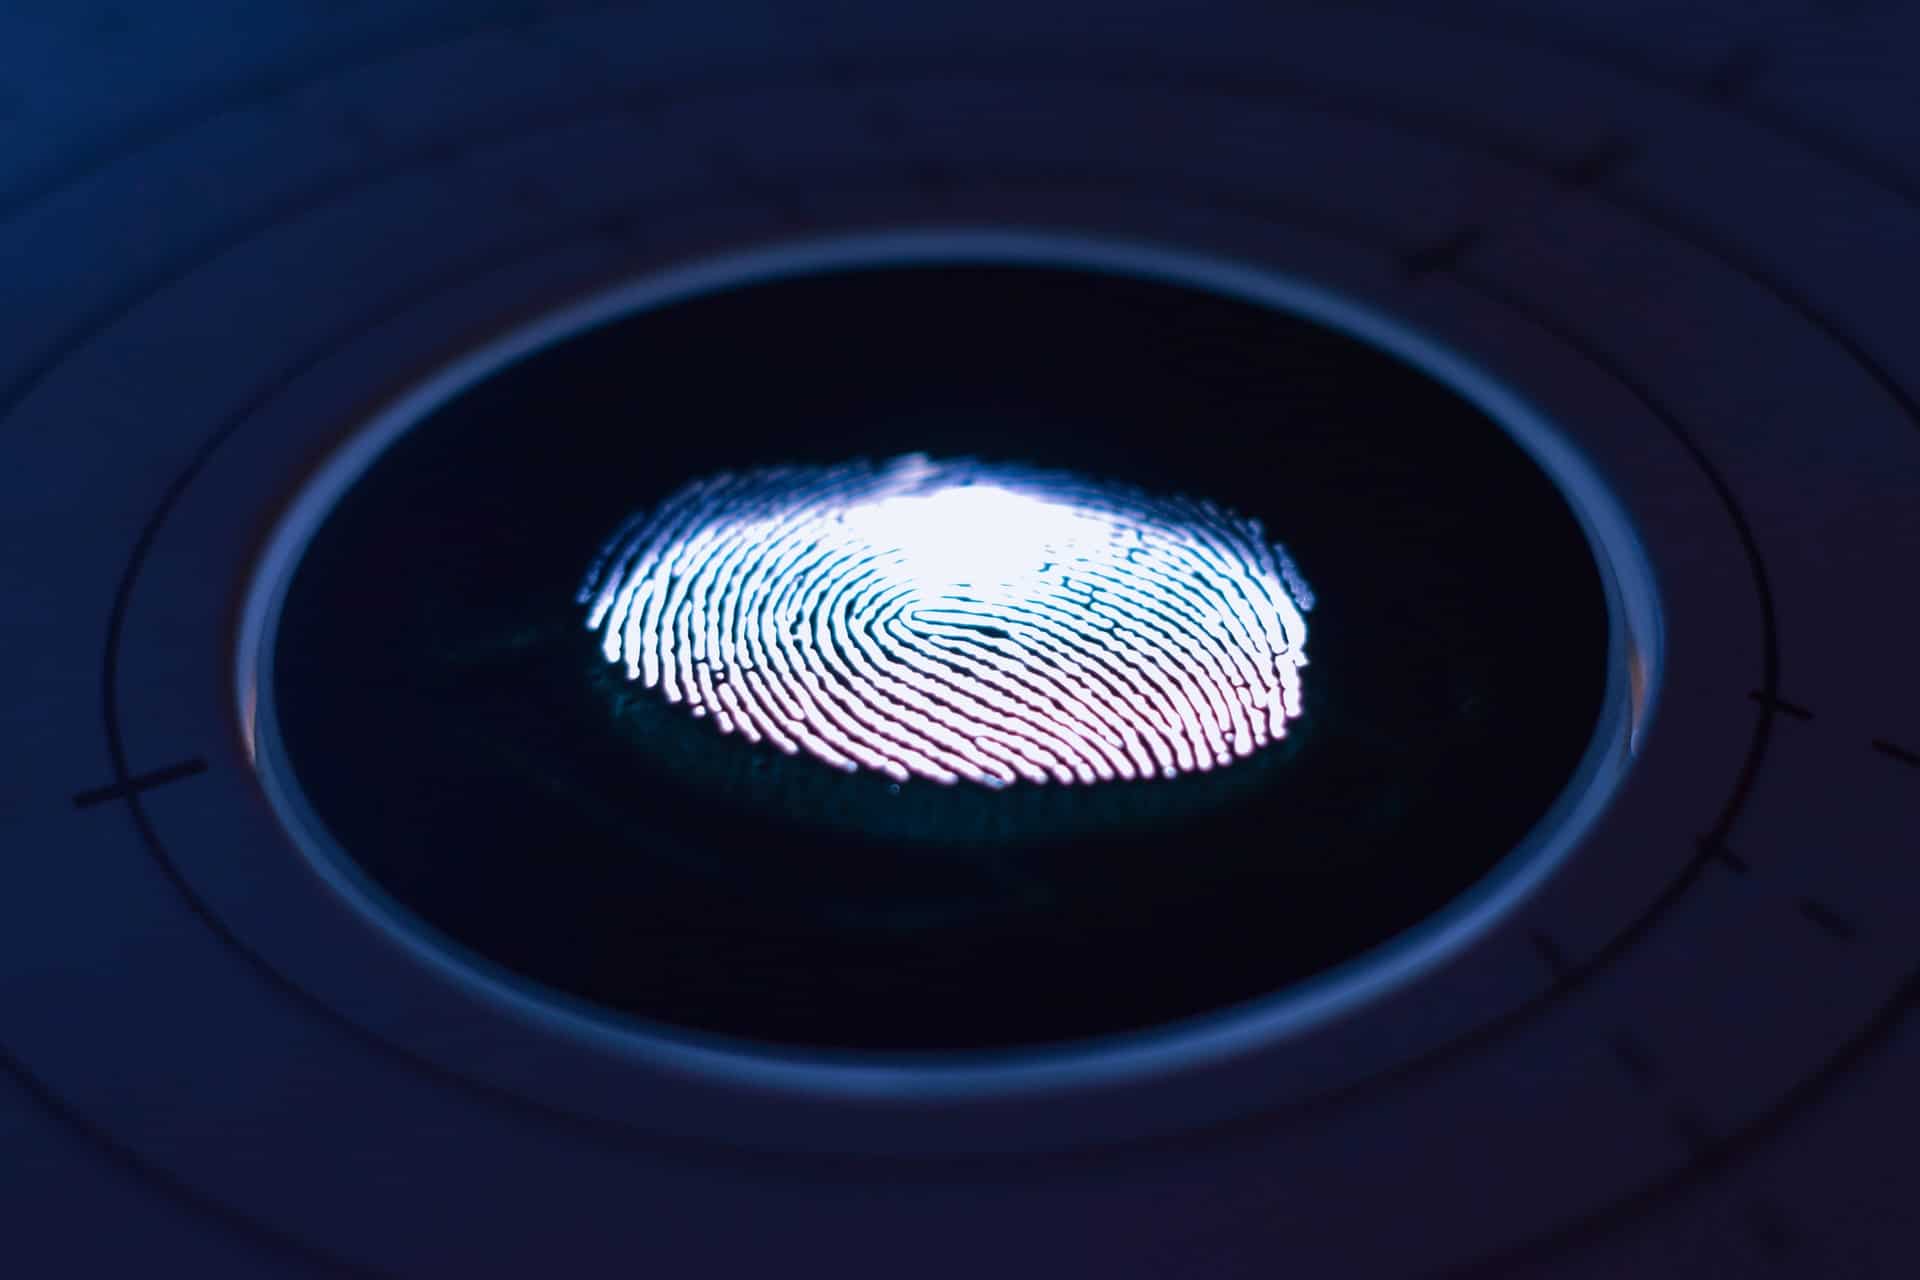 arizona fingerprint clearance card -- illuminated fingerprint